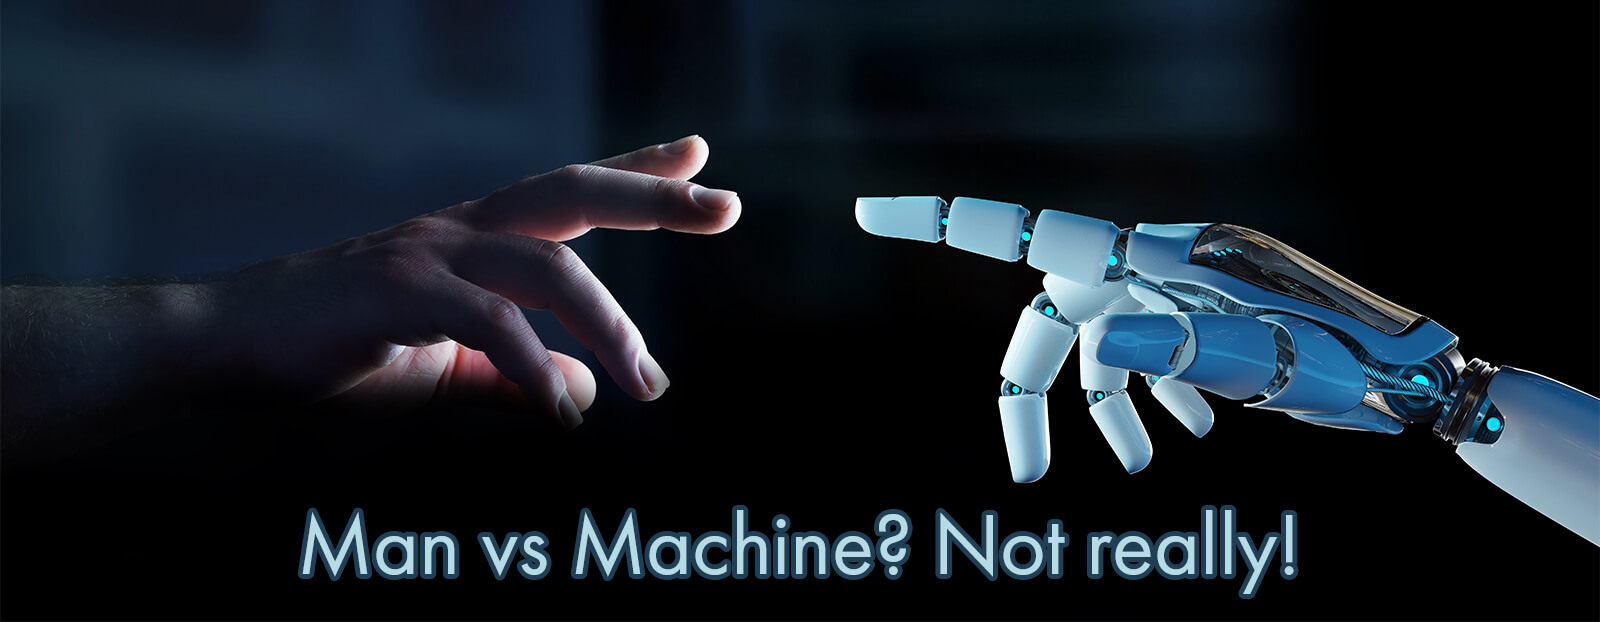 Man vs Machine? Not really!